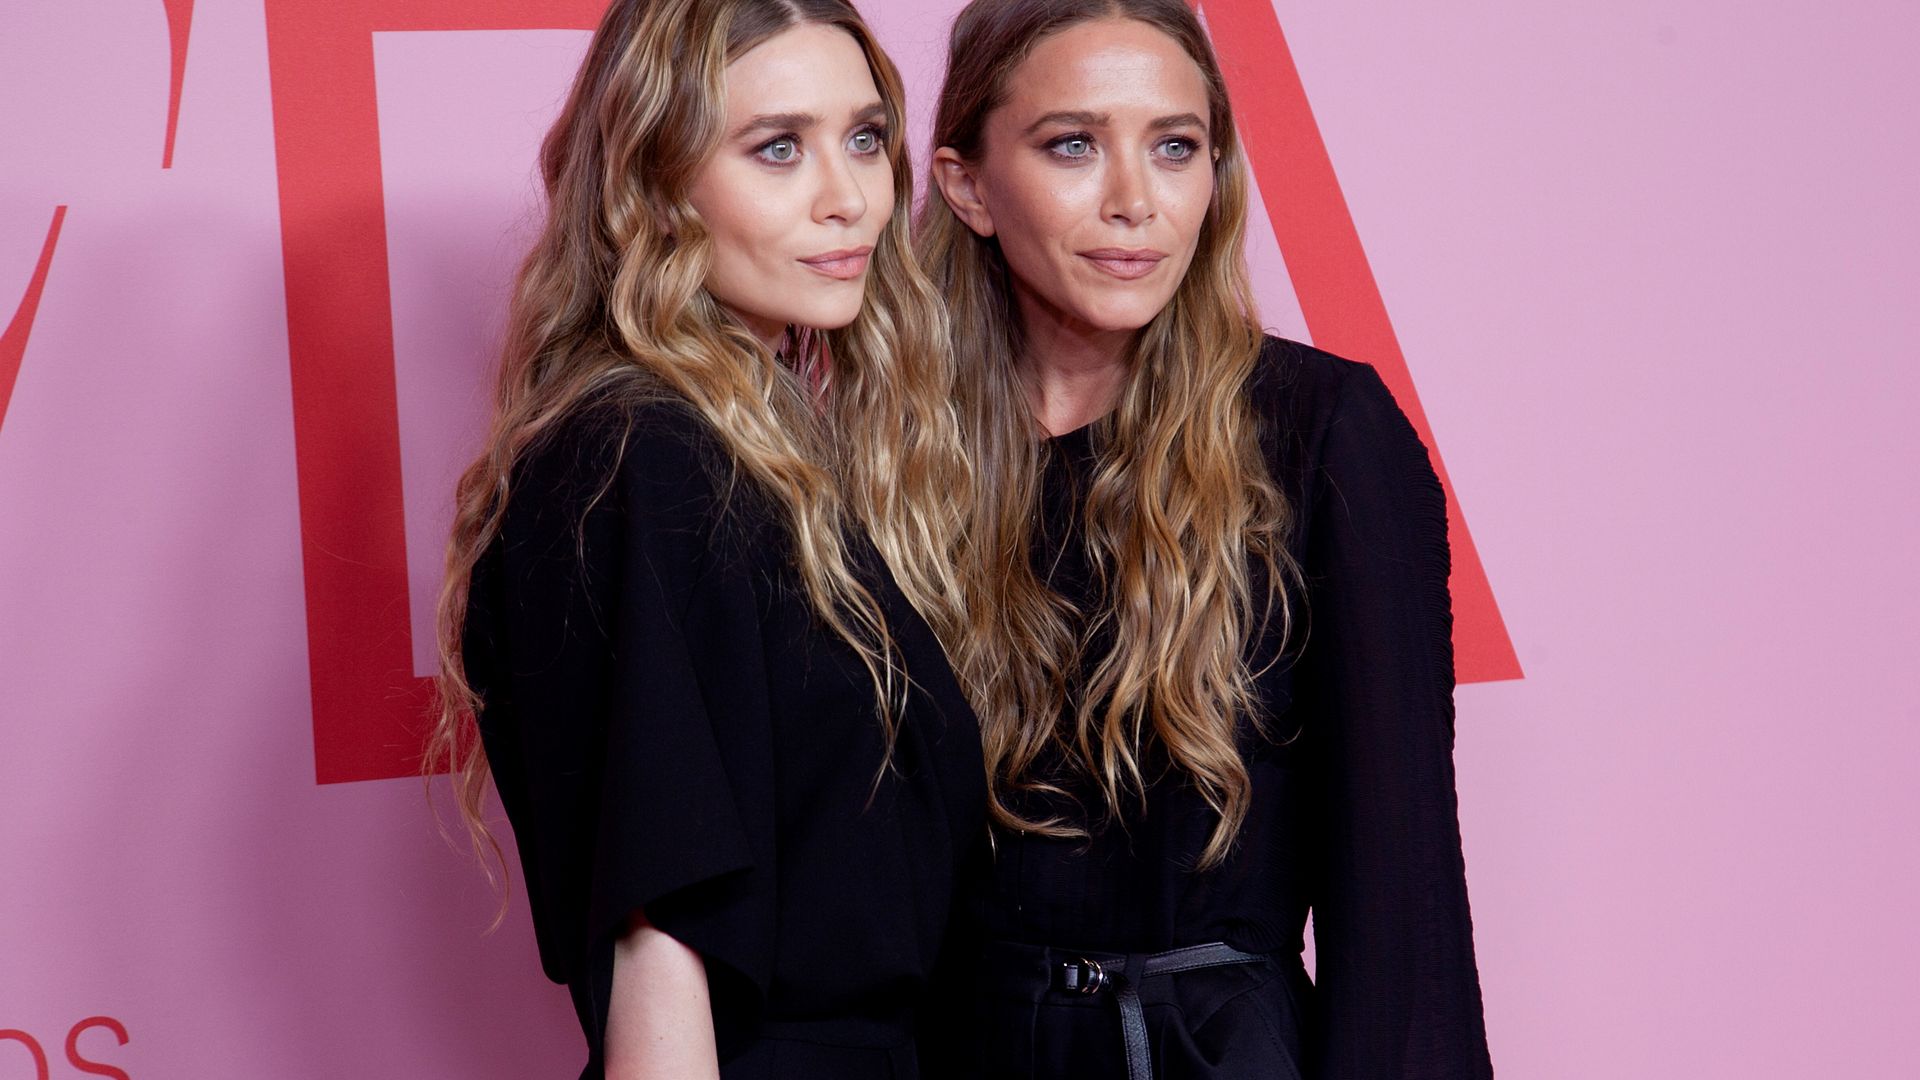 Mary-Kate and Ashley Olsen turn 38: From child superstars to fashion moguls